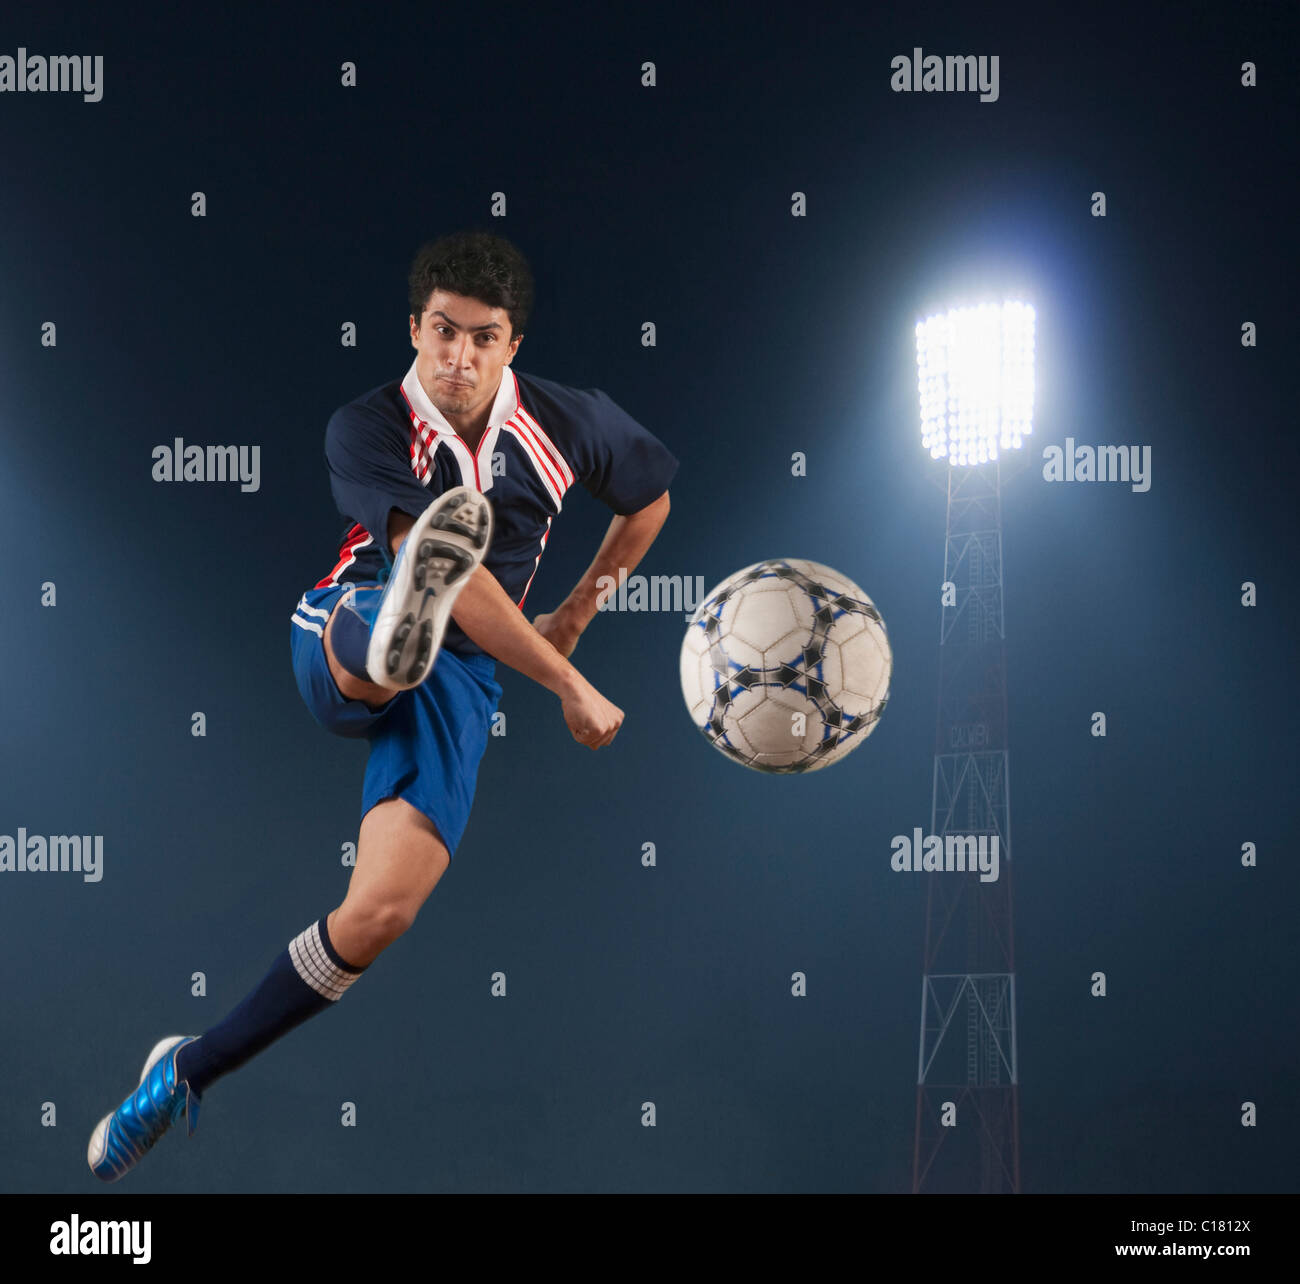 Soccer player kicking a soccer ball Stock Photo